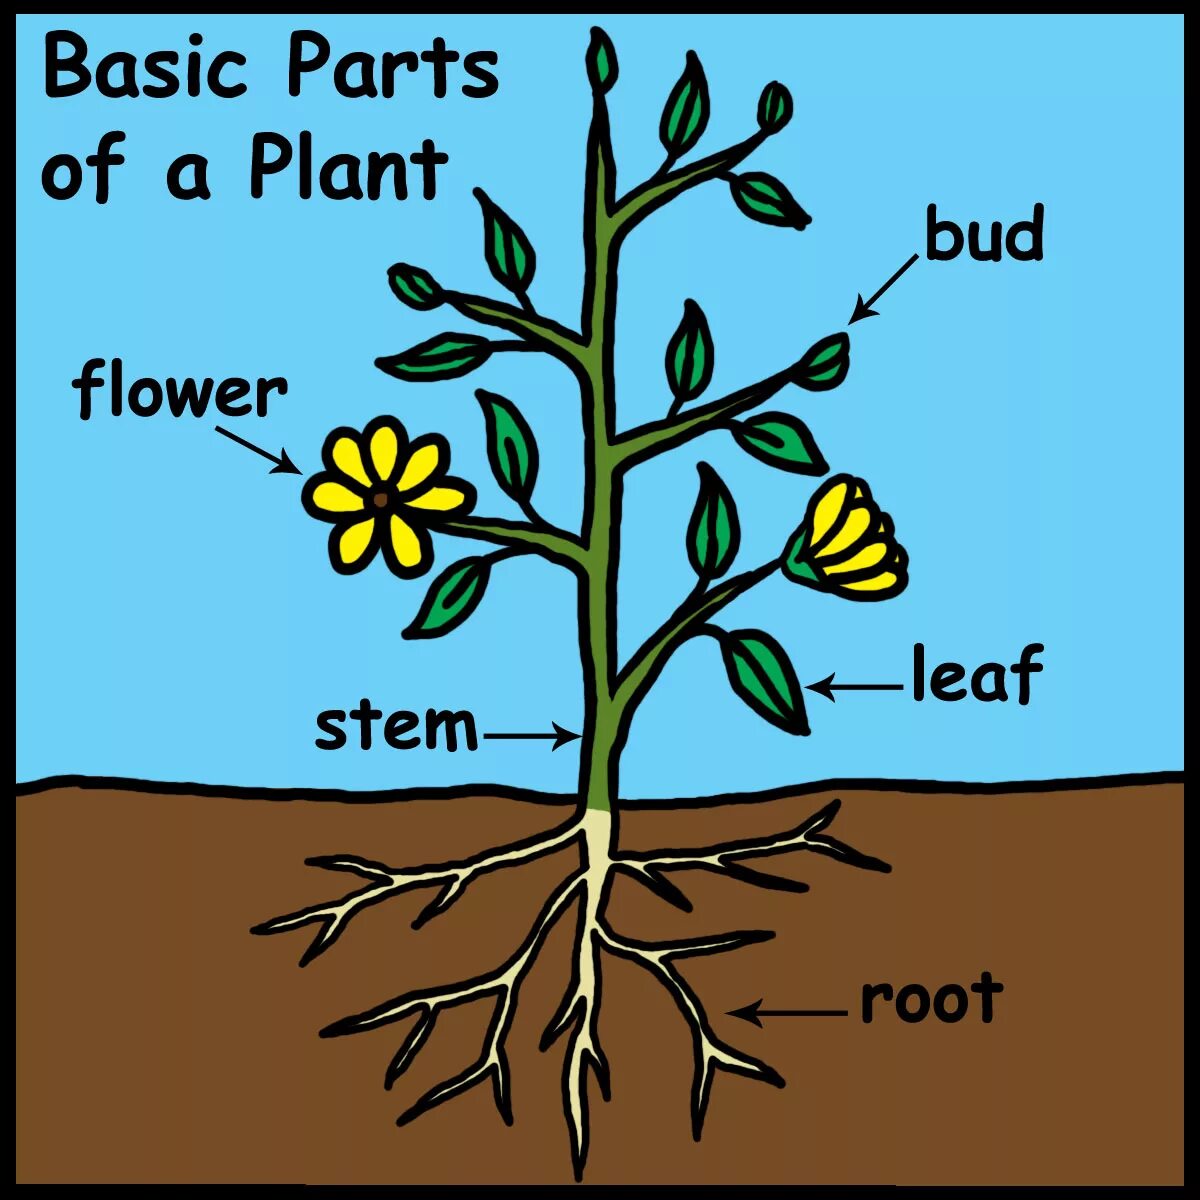 Plants kinds. Parts of a Plant. Parts of Plants for Kids. Parts of a Plant цветок. Части цветка картинка для детей.